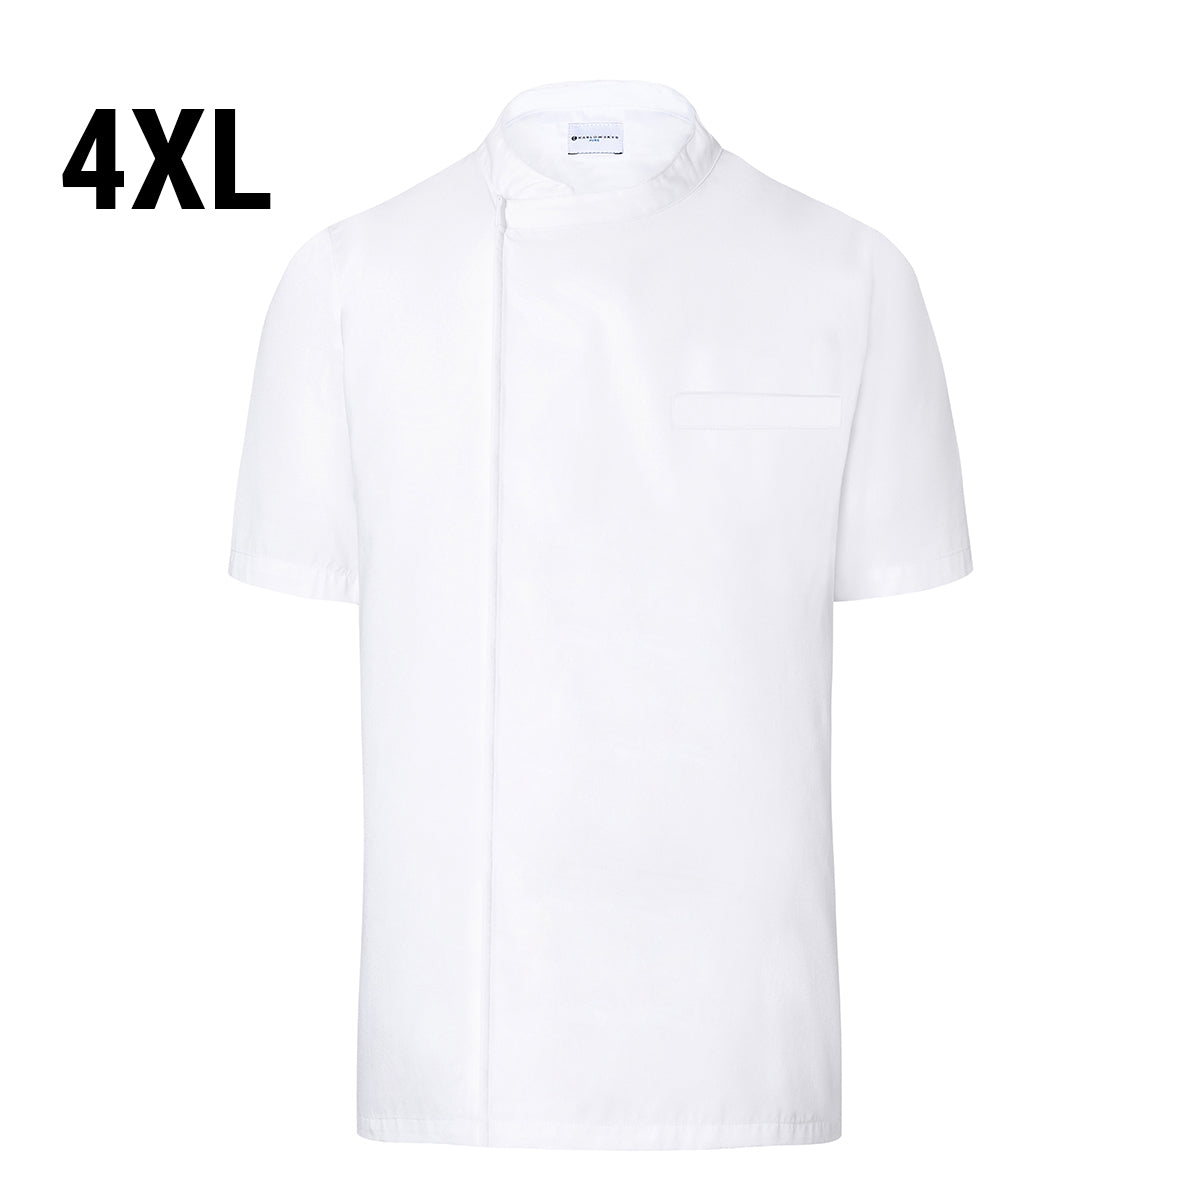 Karlowsky - Kortærmet kokkeskjorte - Hvid - Strl. 4XL